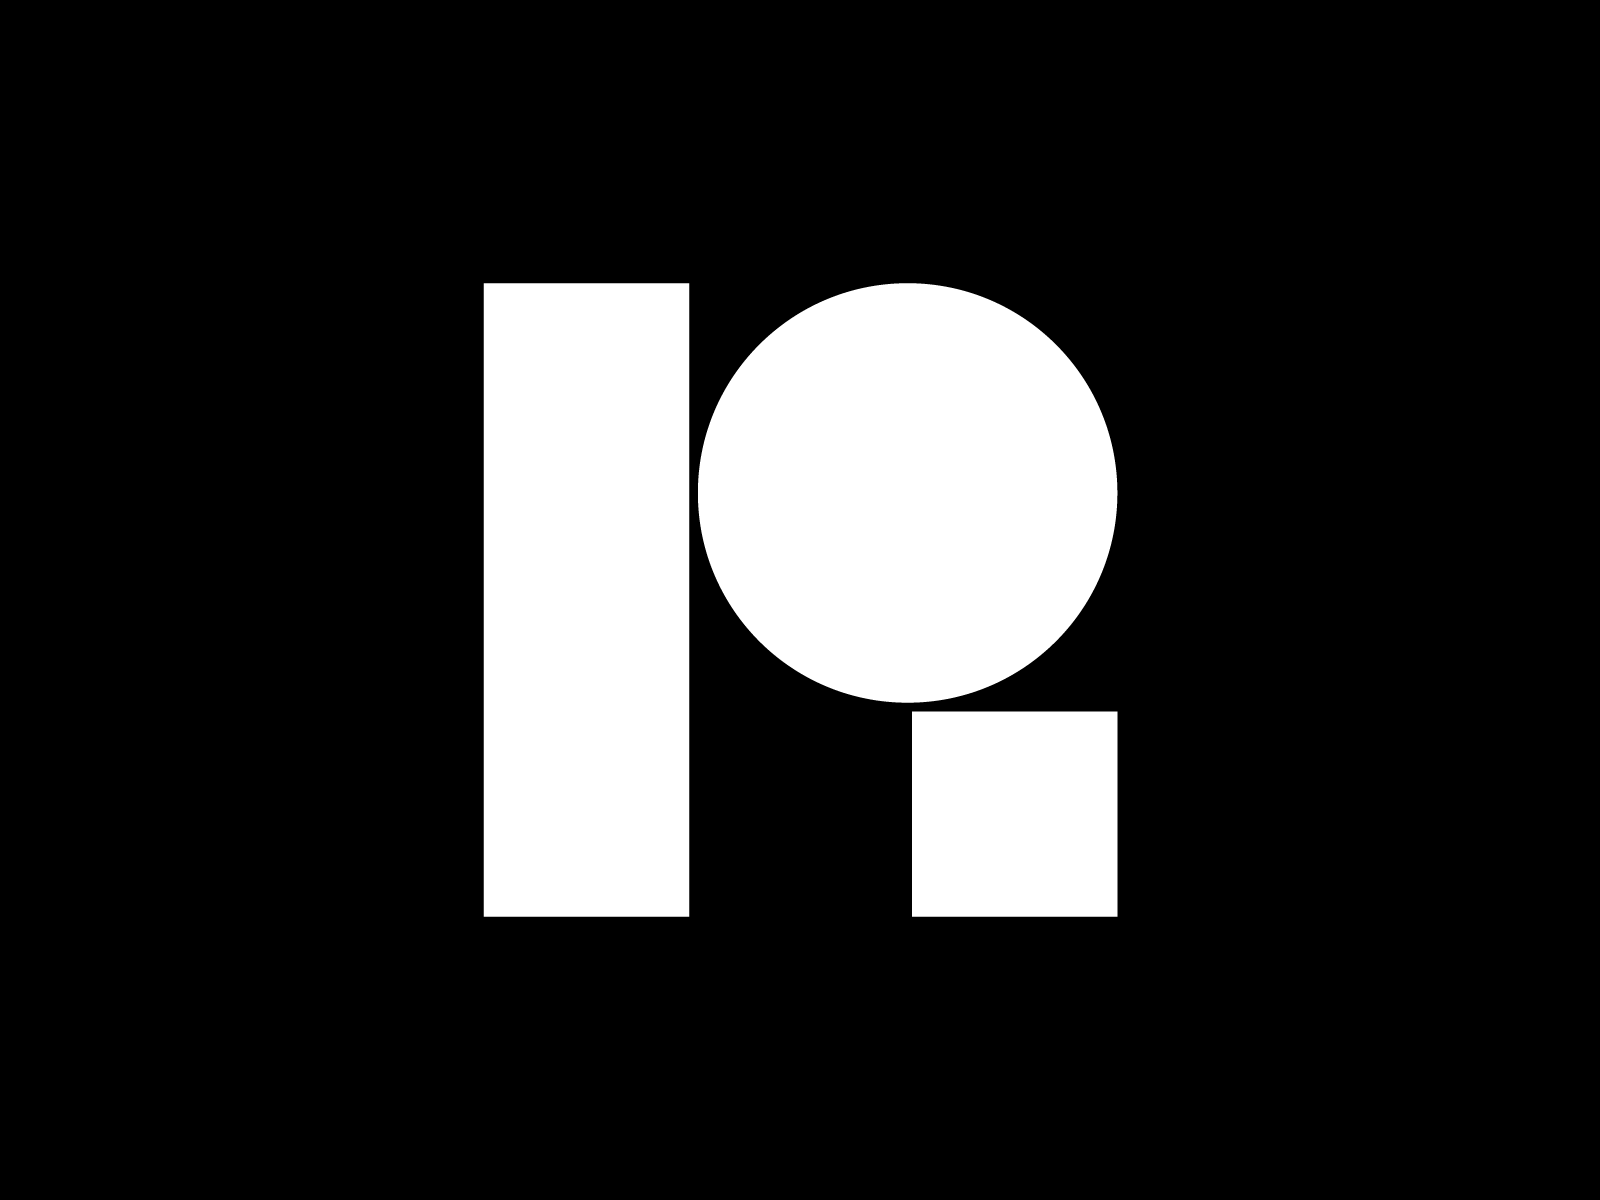 R monogram / New personal symbol by Rubén Ferlo on Dribbble